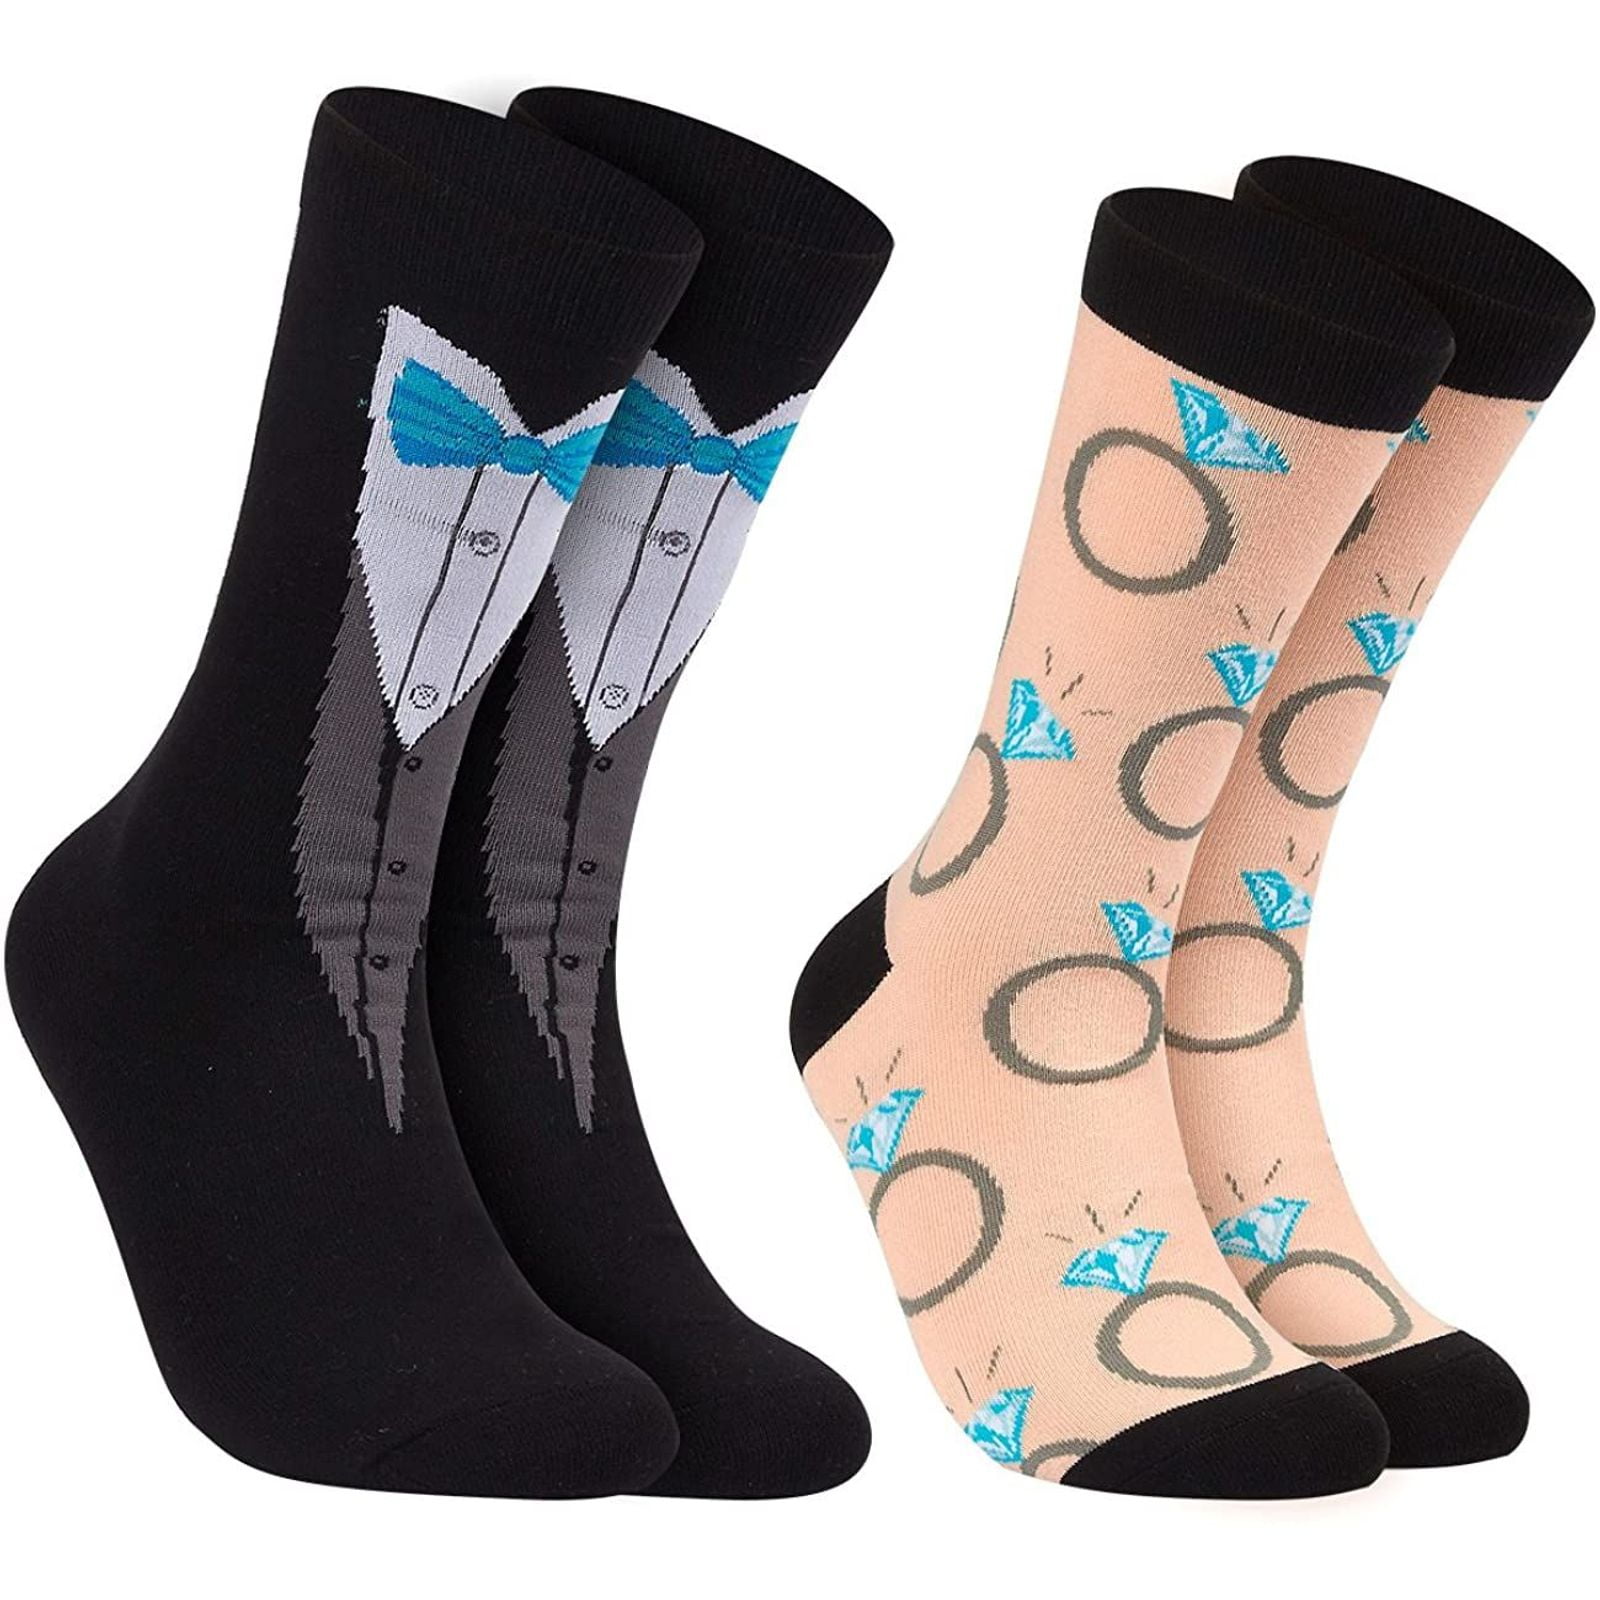 5 pair/lot cotton novelty socks funny socks mens casual dress socks wedding gift